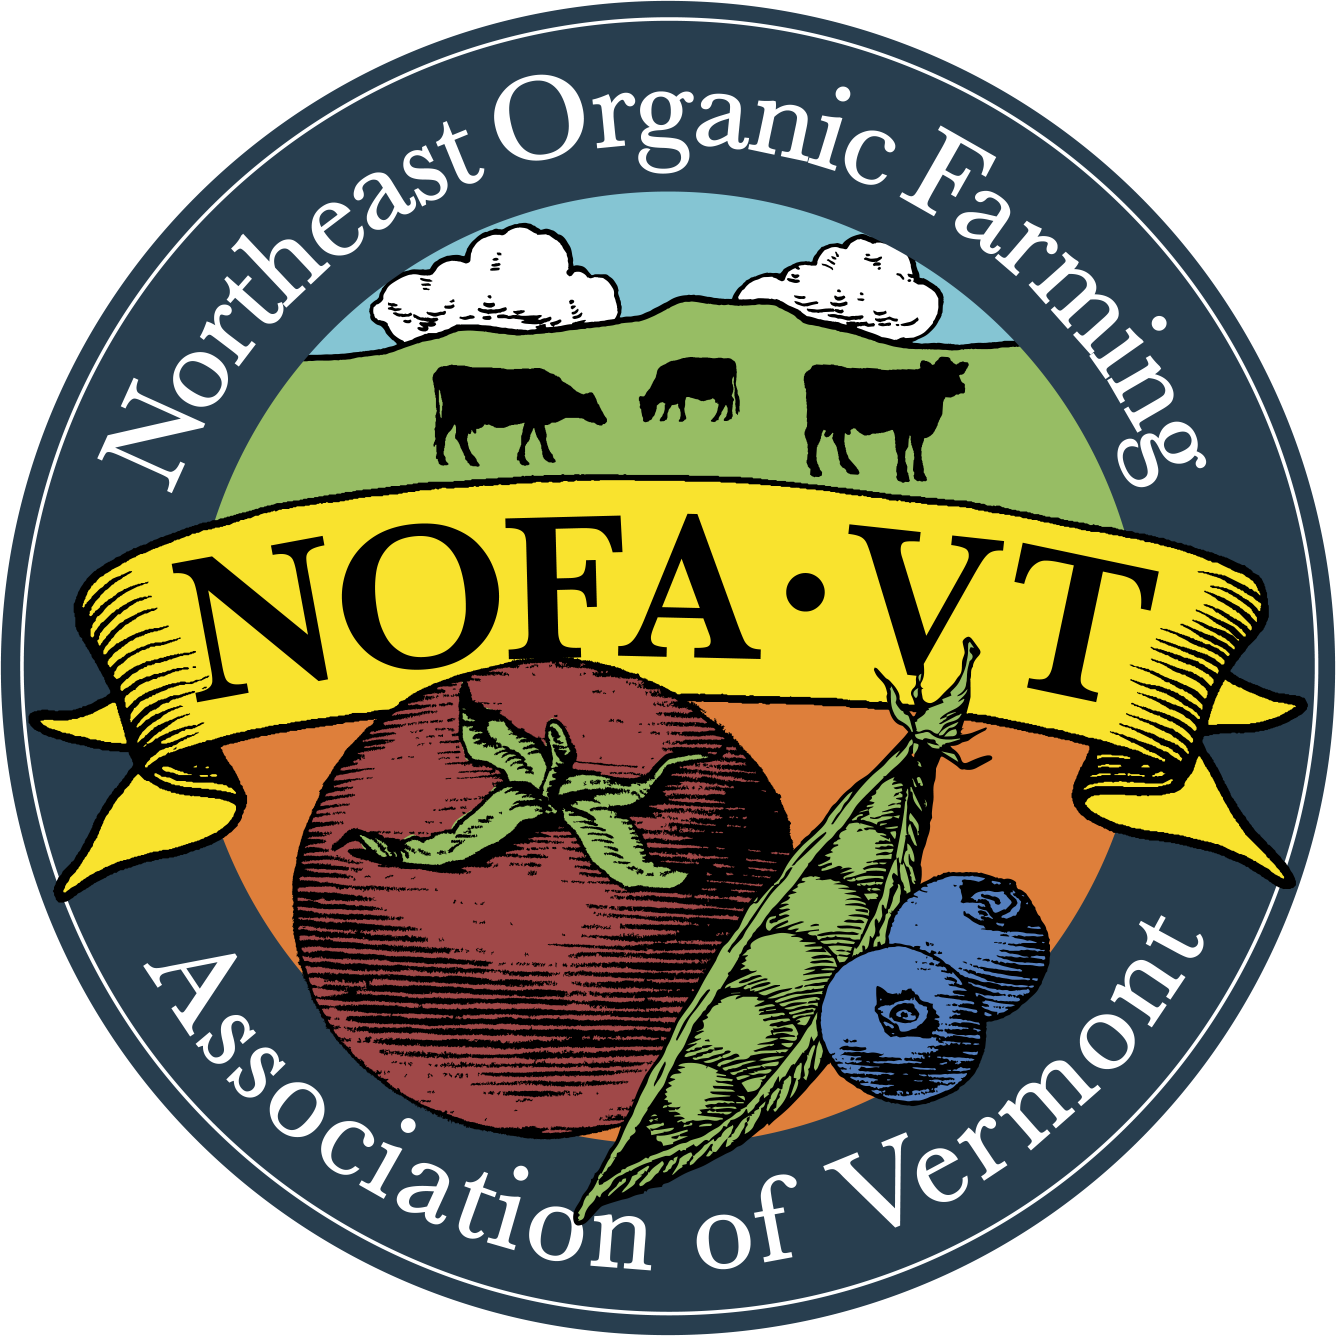 NOFA-VT logo